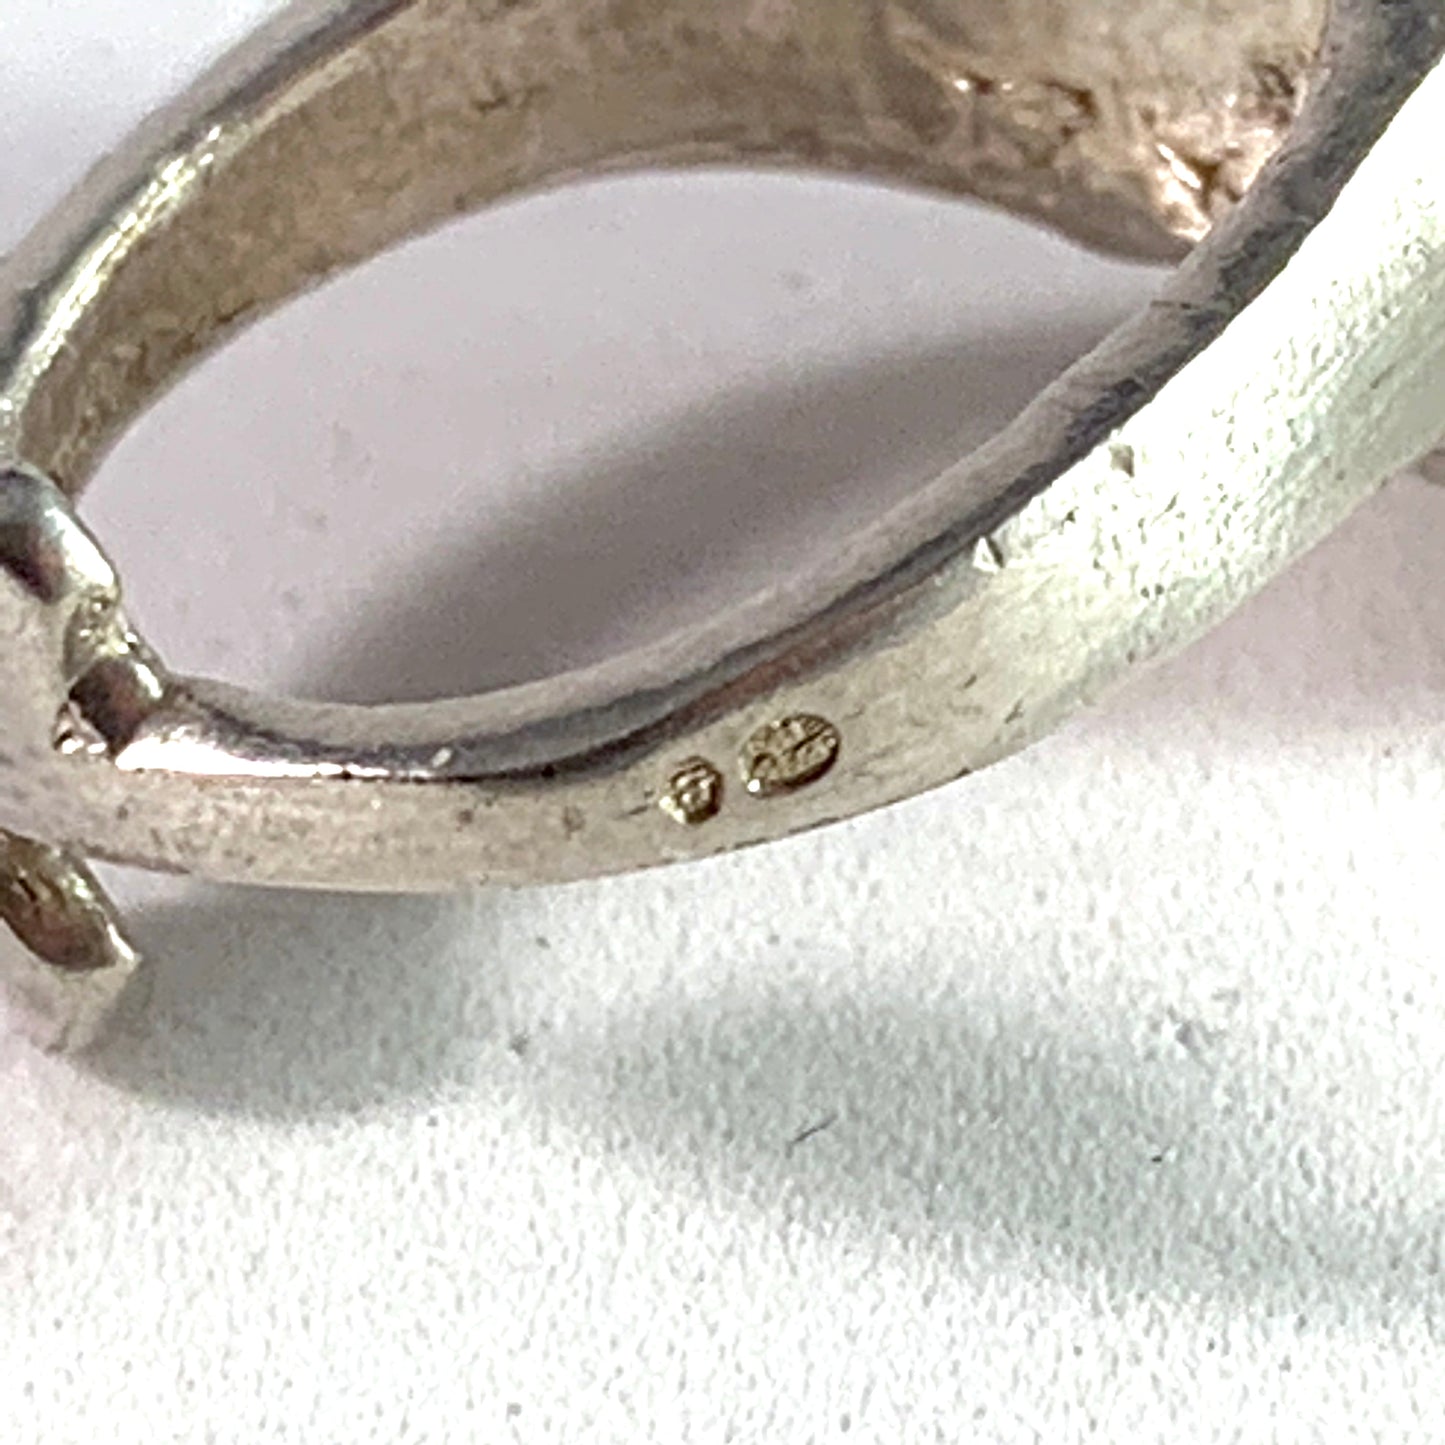 Robbert, Sweden 1970s Vintage Sterling Silver Culture Pearl Ring. Signed.